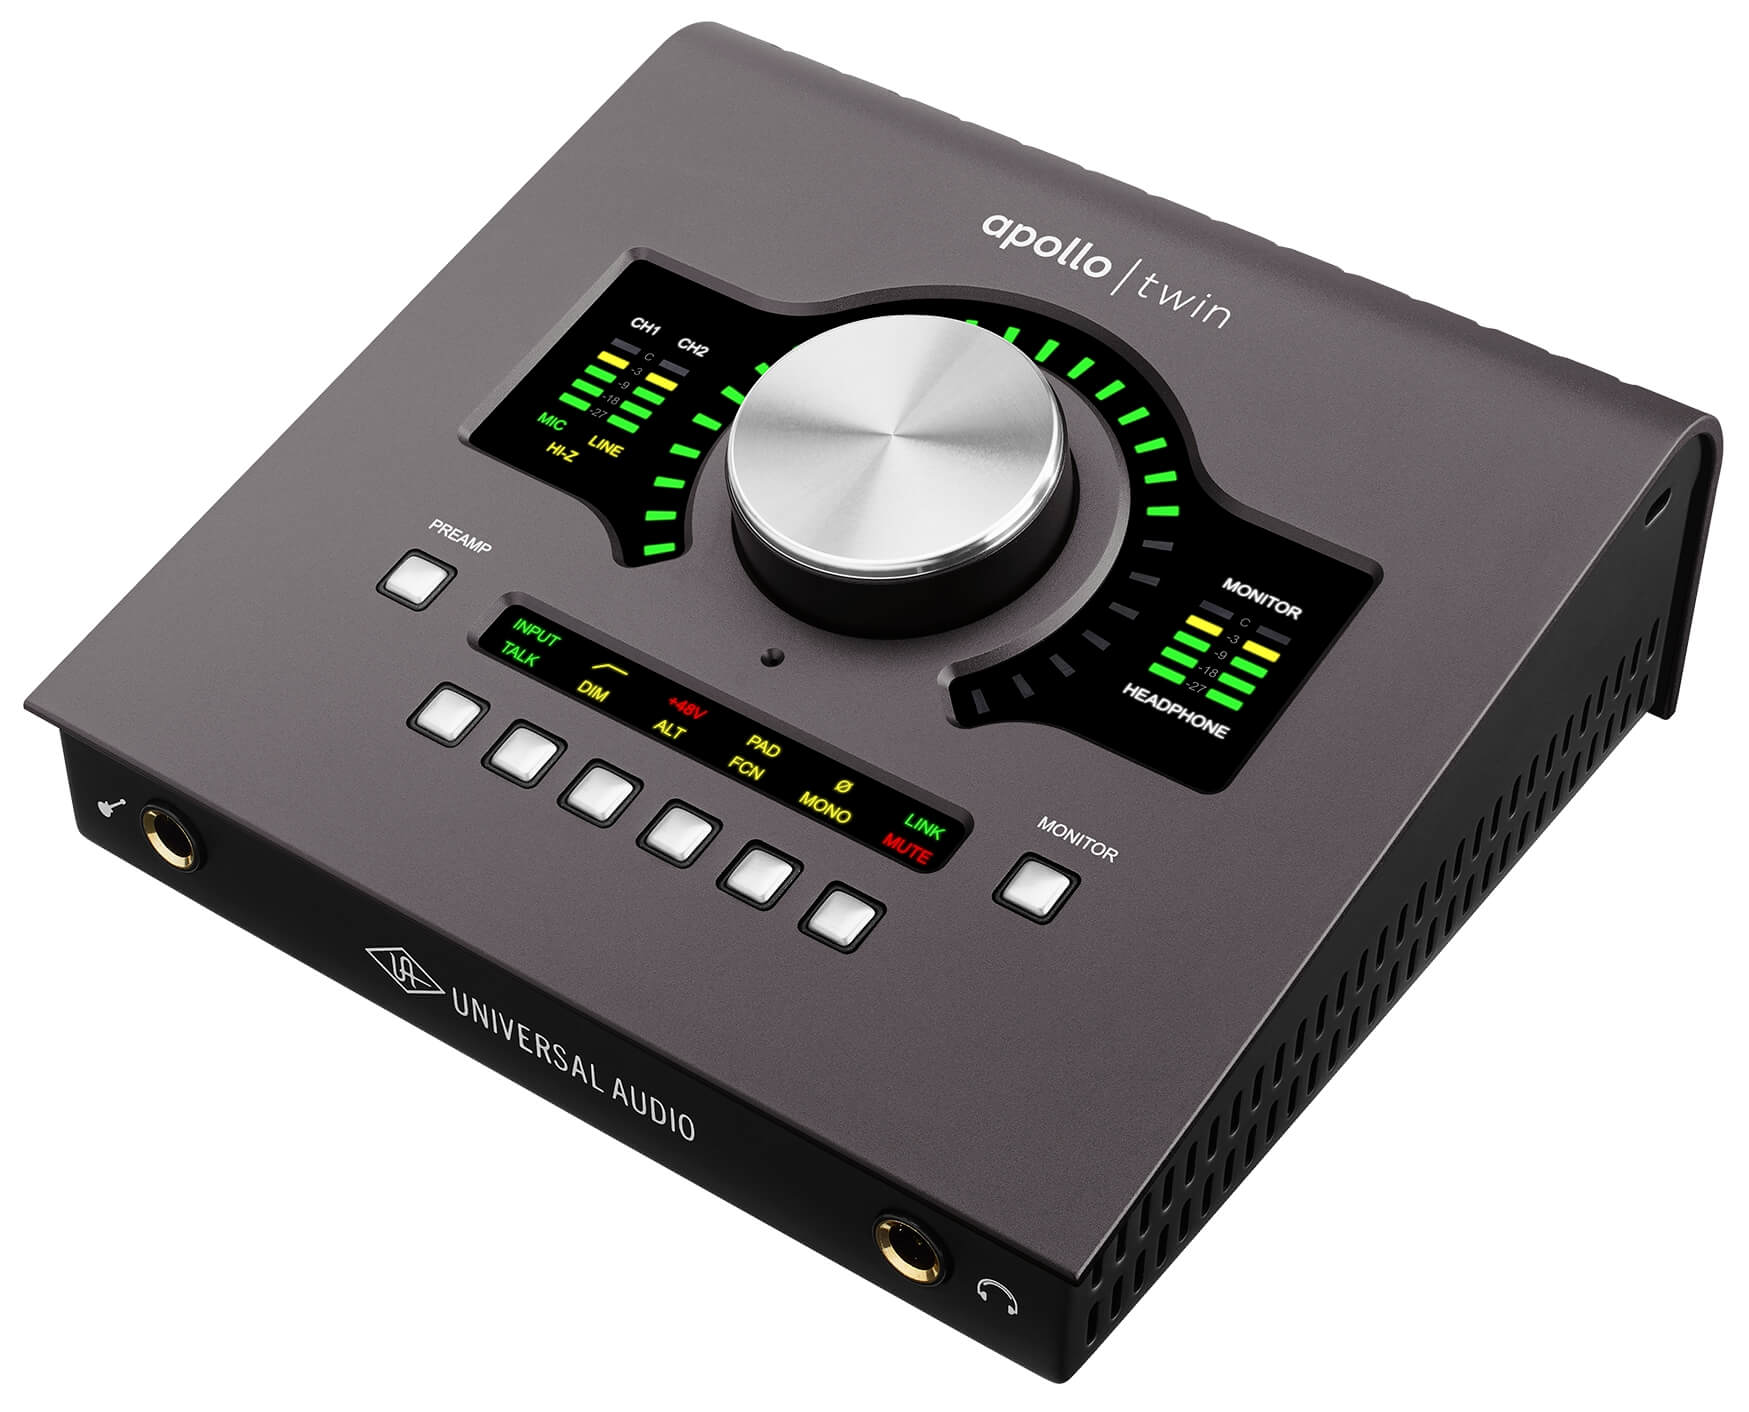 Apollo Twin MkII desktop audio interface now shipping